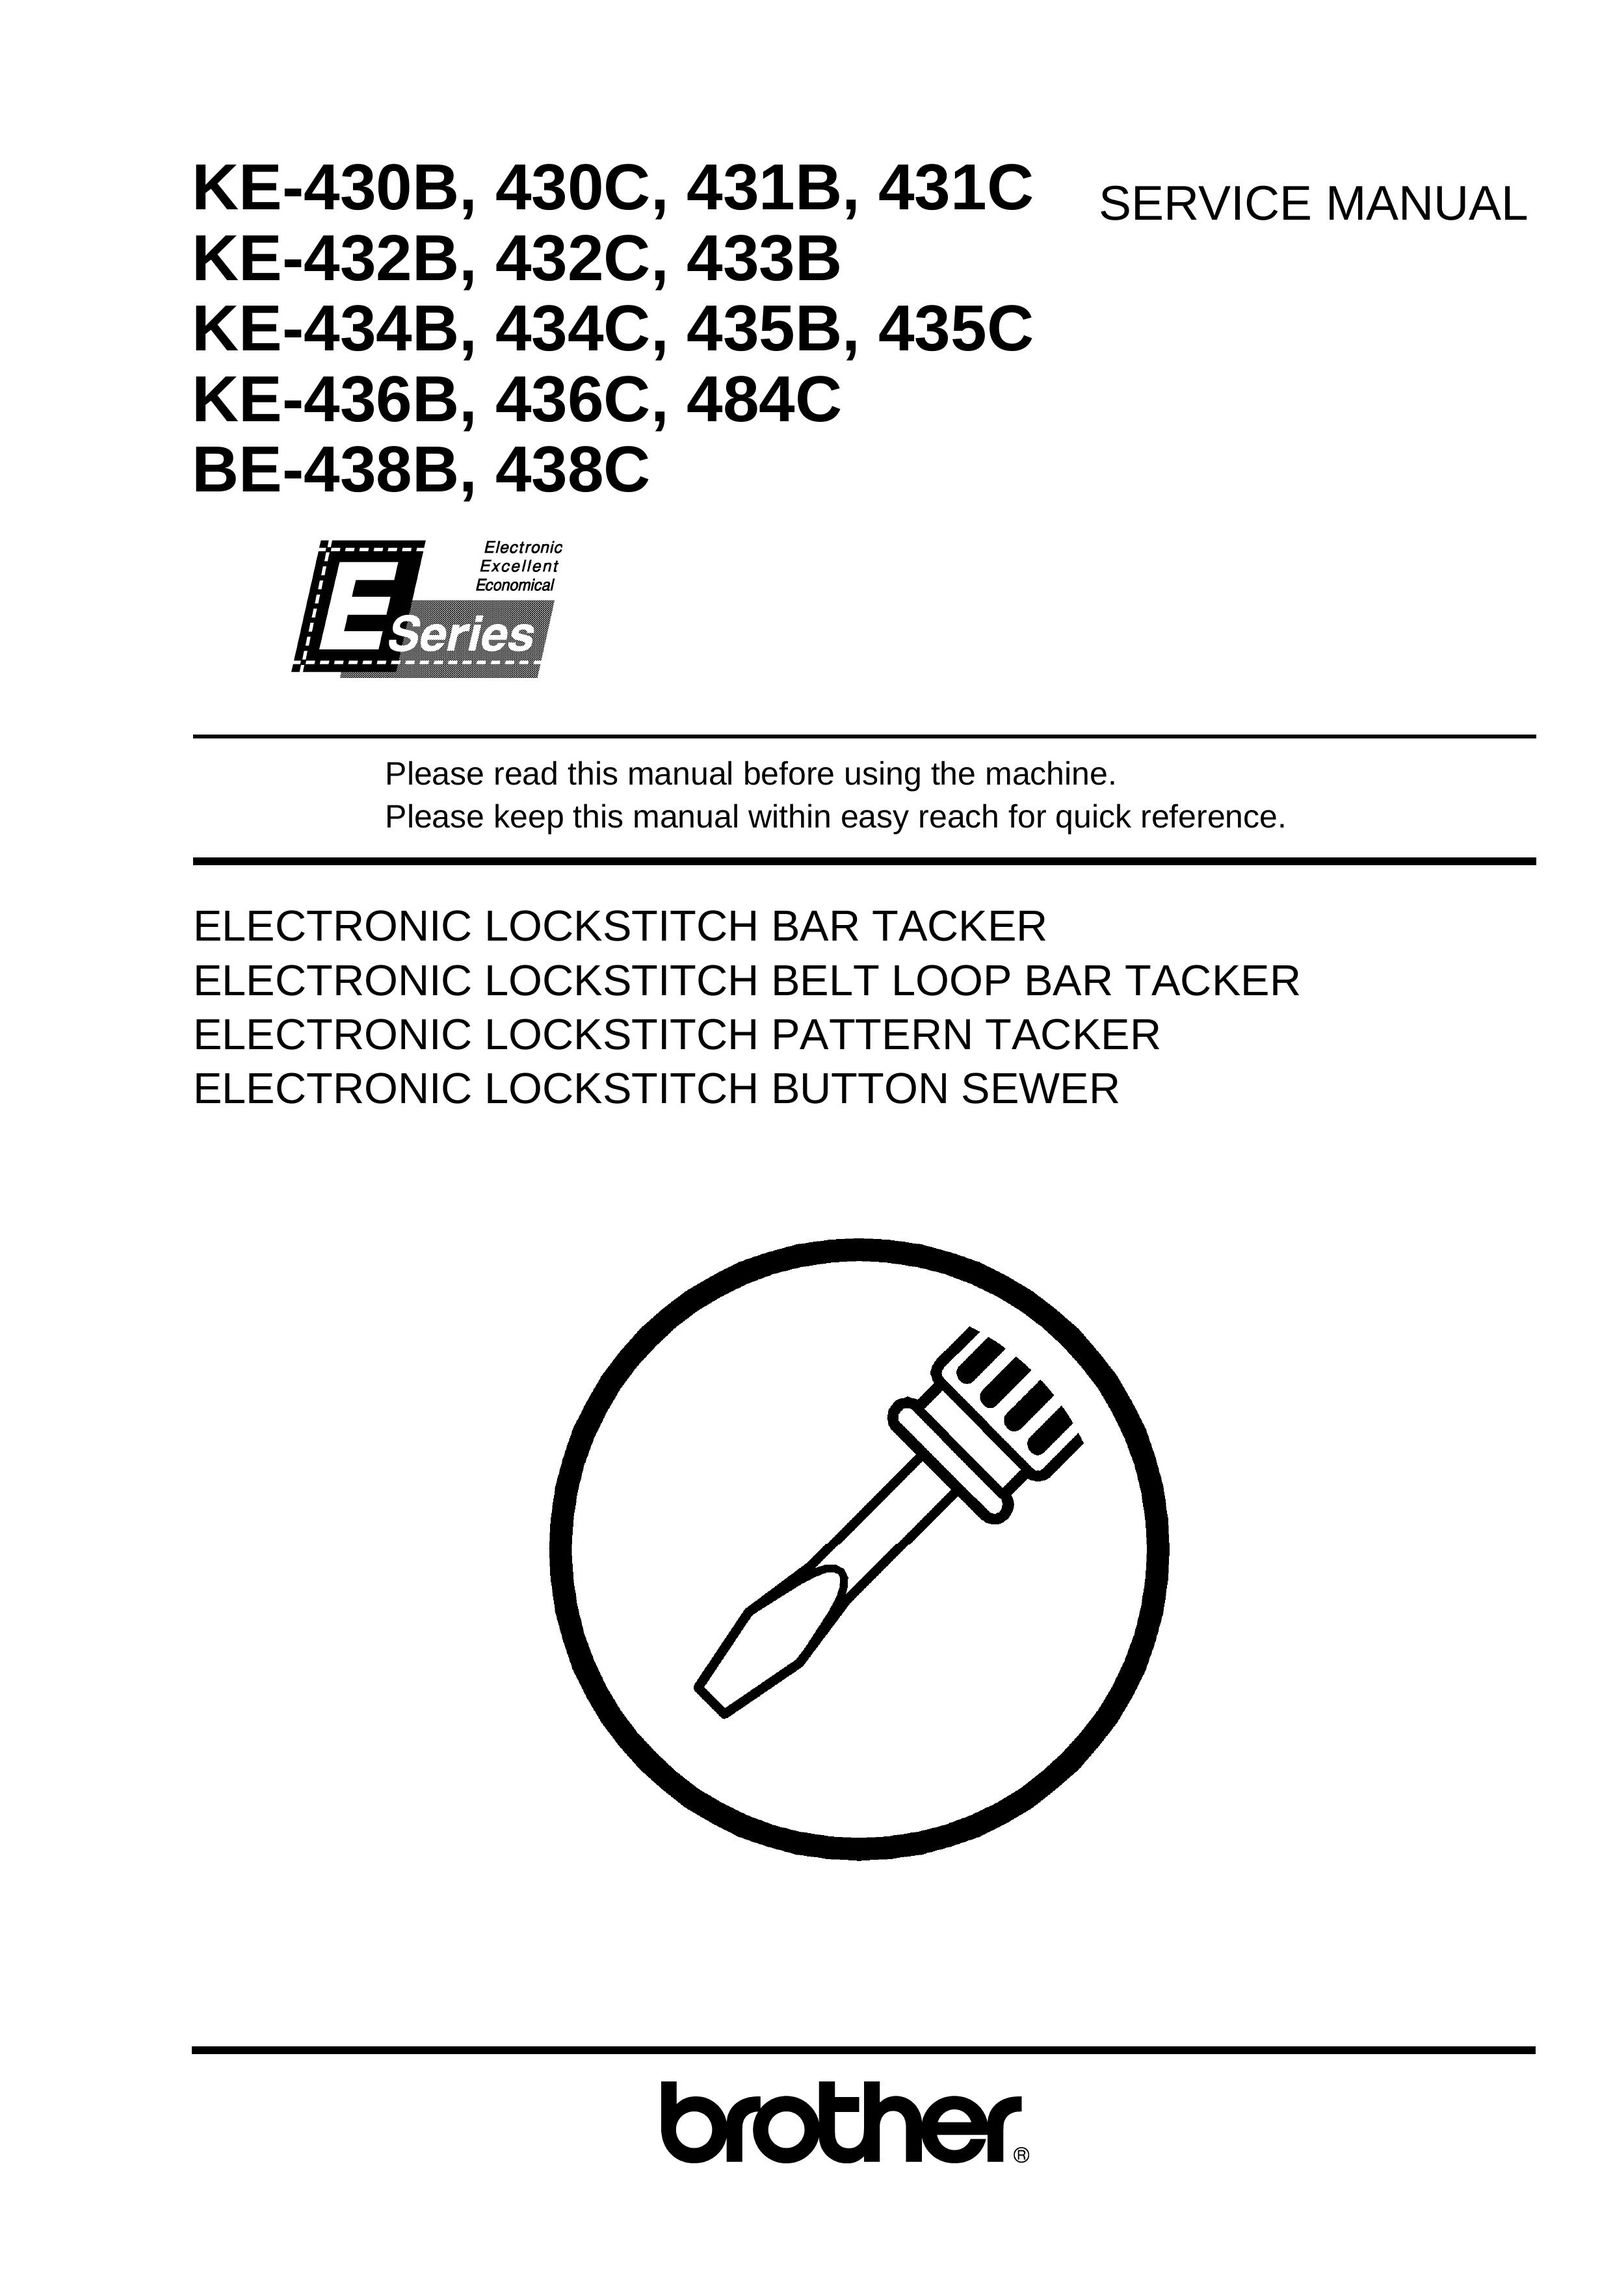 Brother 433B Sewing Machine User Manual